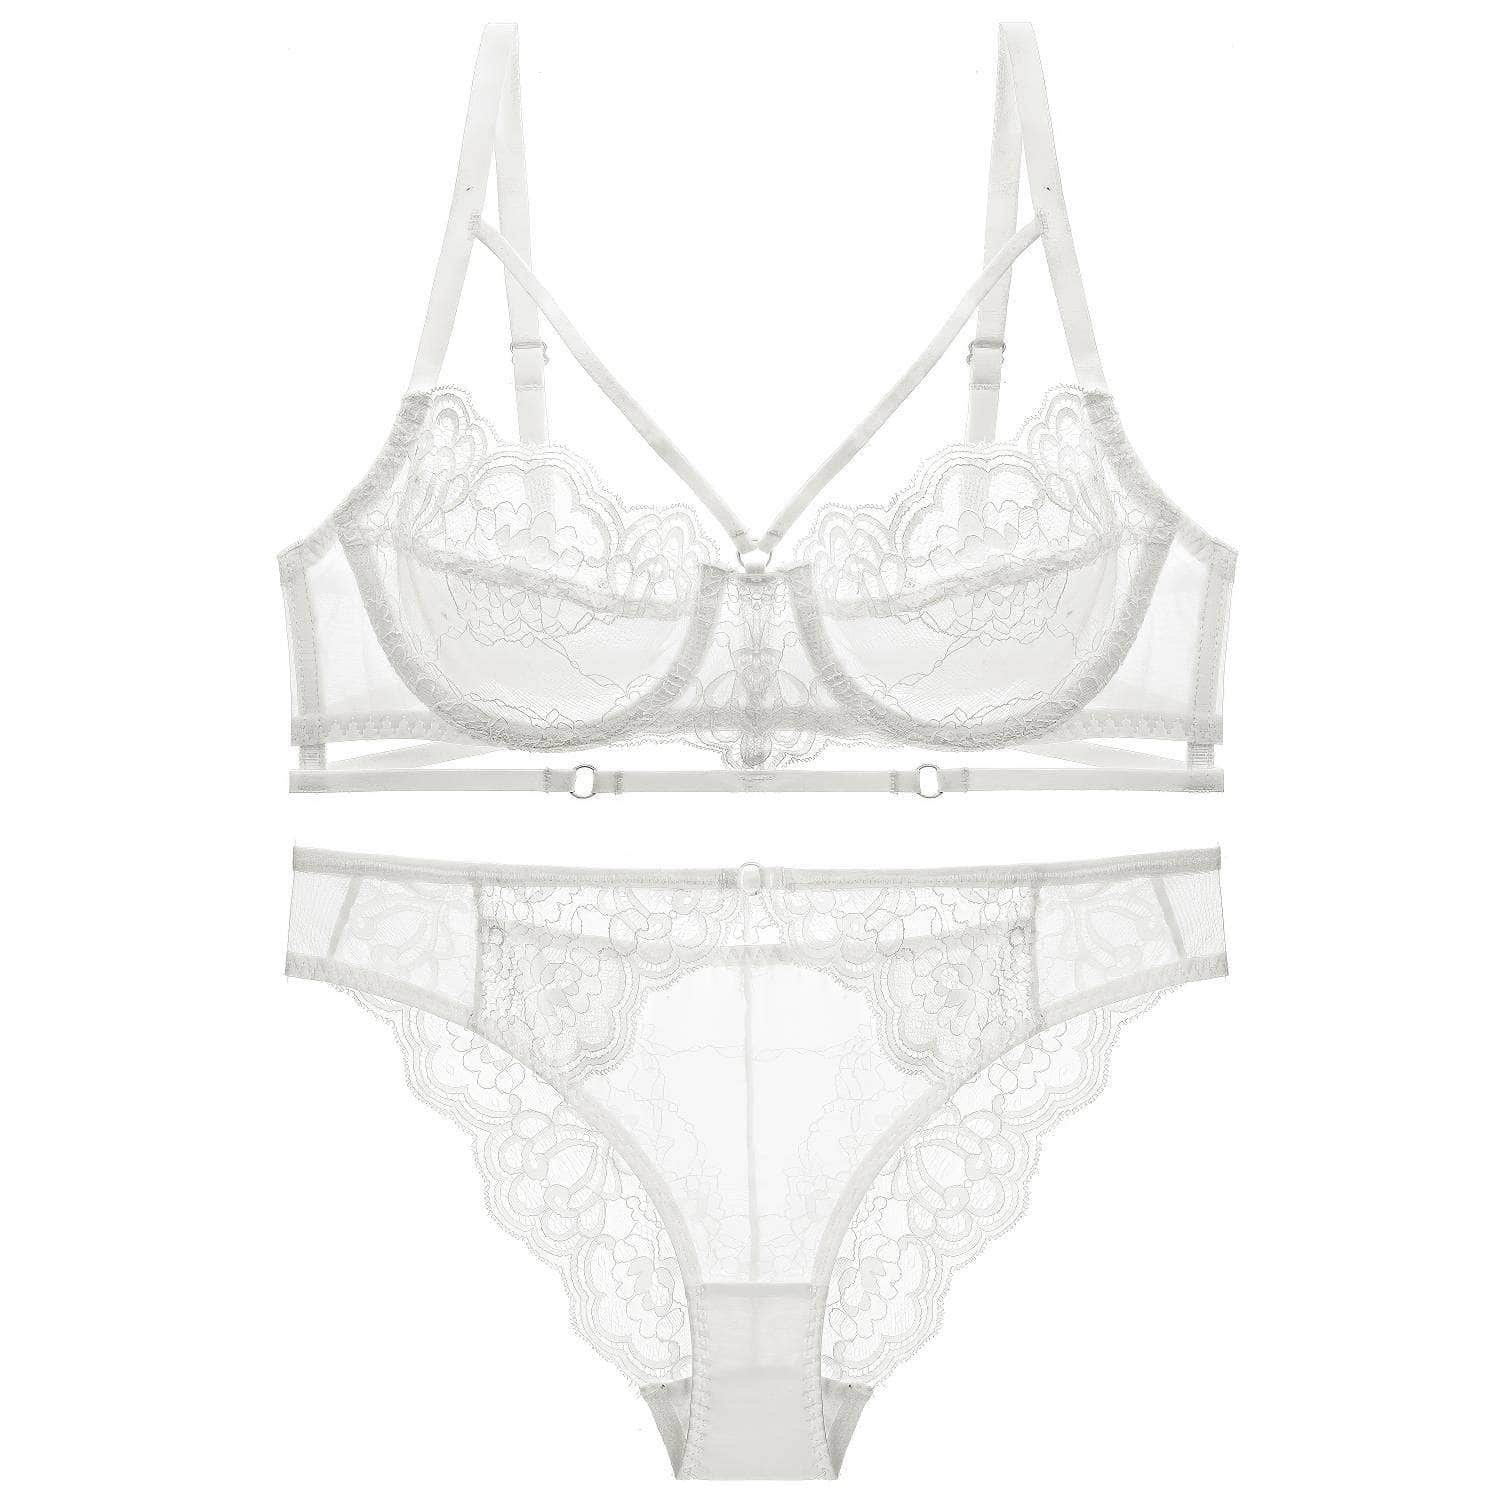 Fine Trimmed Lace Mesh Boudoir Bra Panty Set UK 32A-32D / White